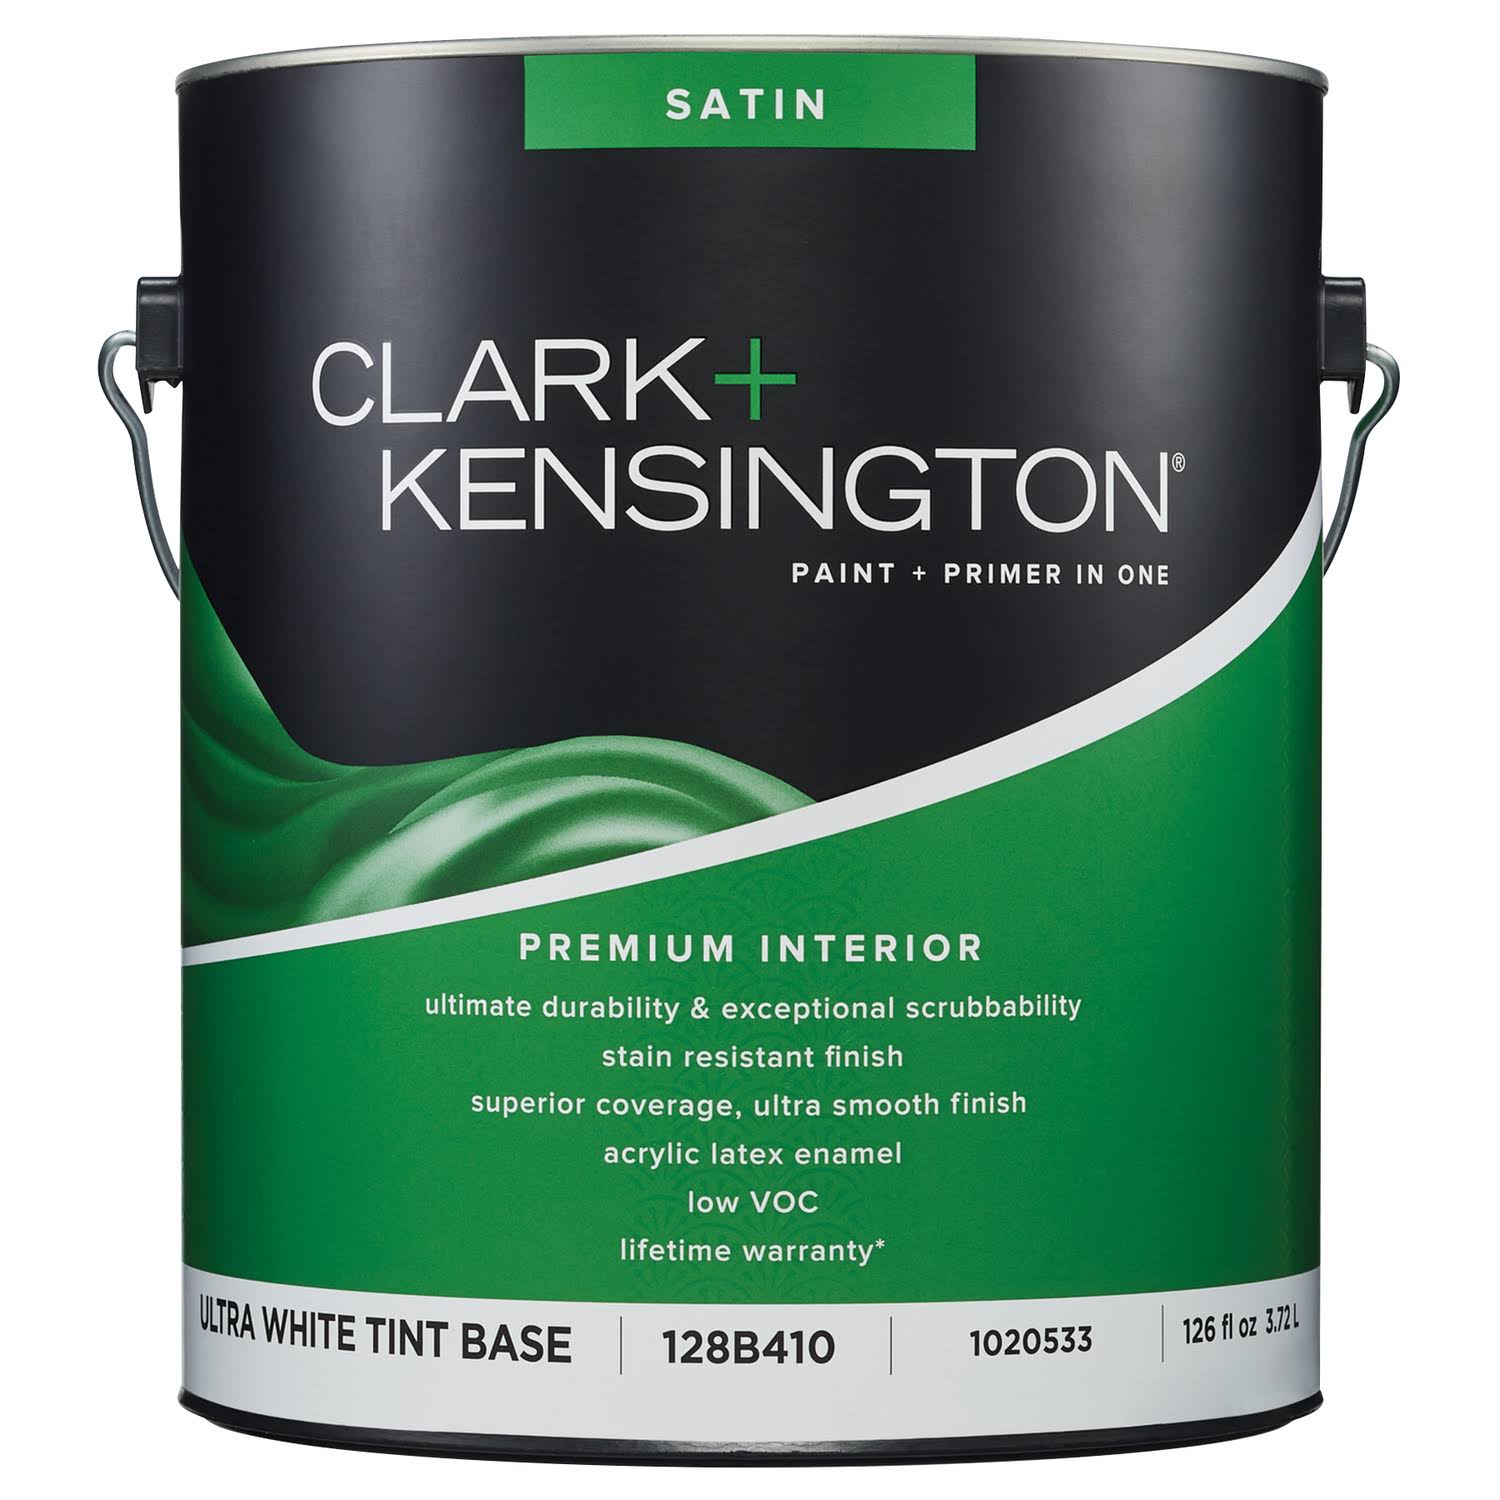 Clark+kensington Satin Tint Base Ultra White Base Acrylic Latex Premium Paint Interior 1 gal.